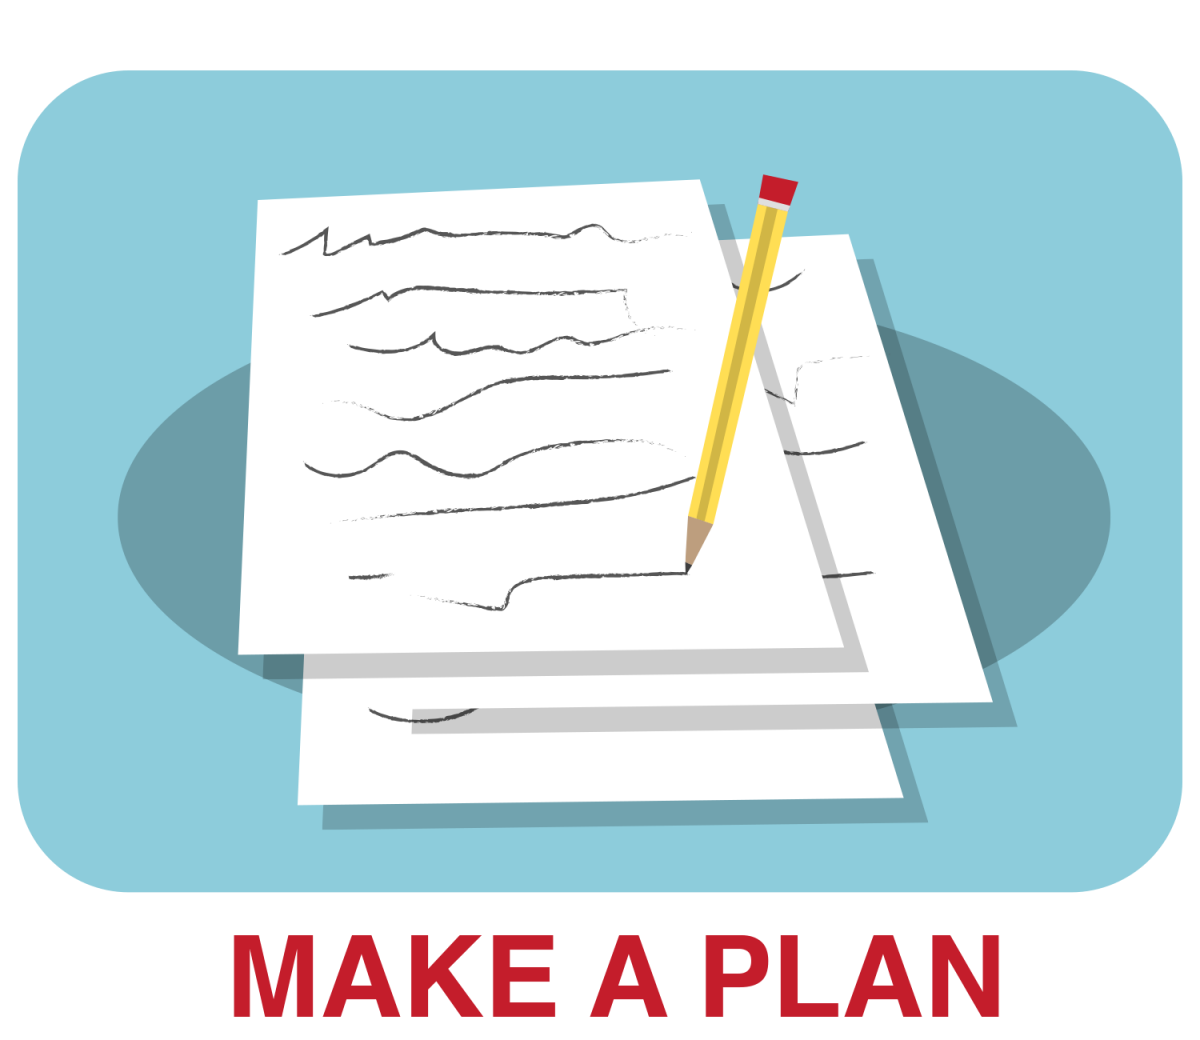 Make a plan image showing written list 